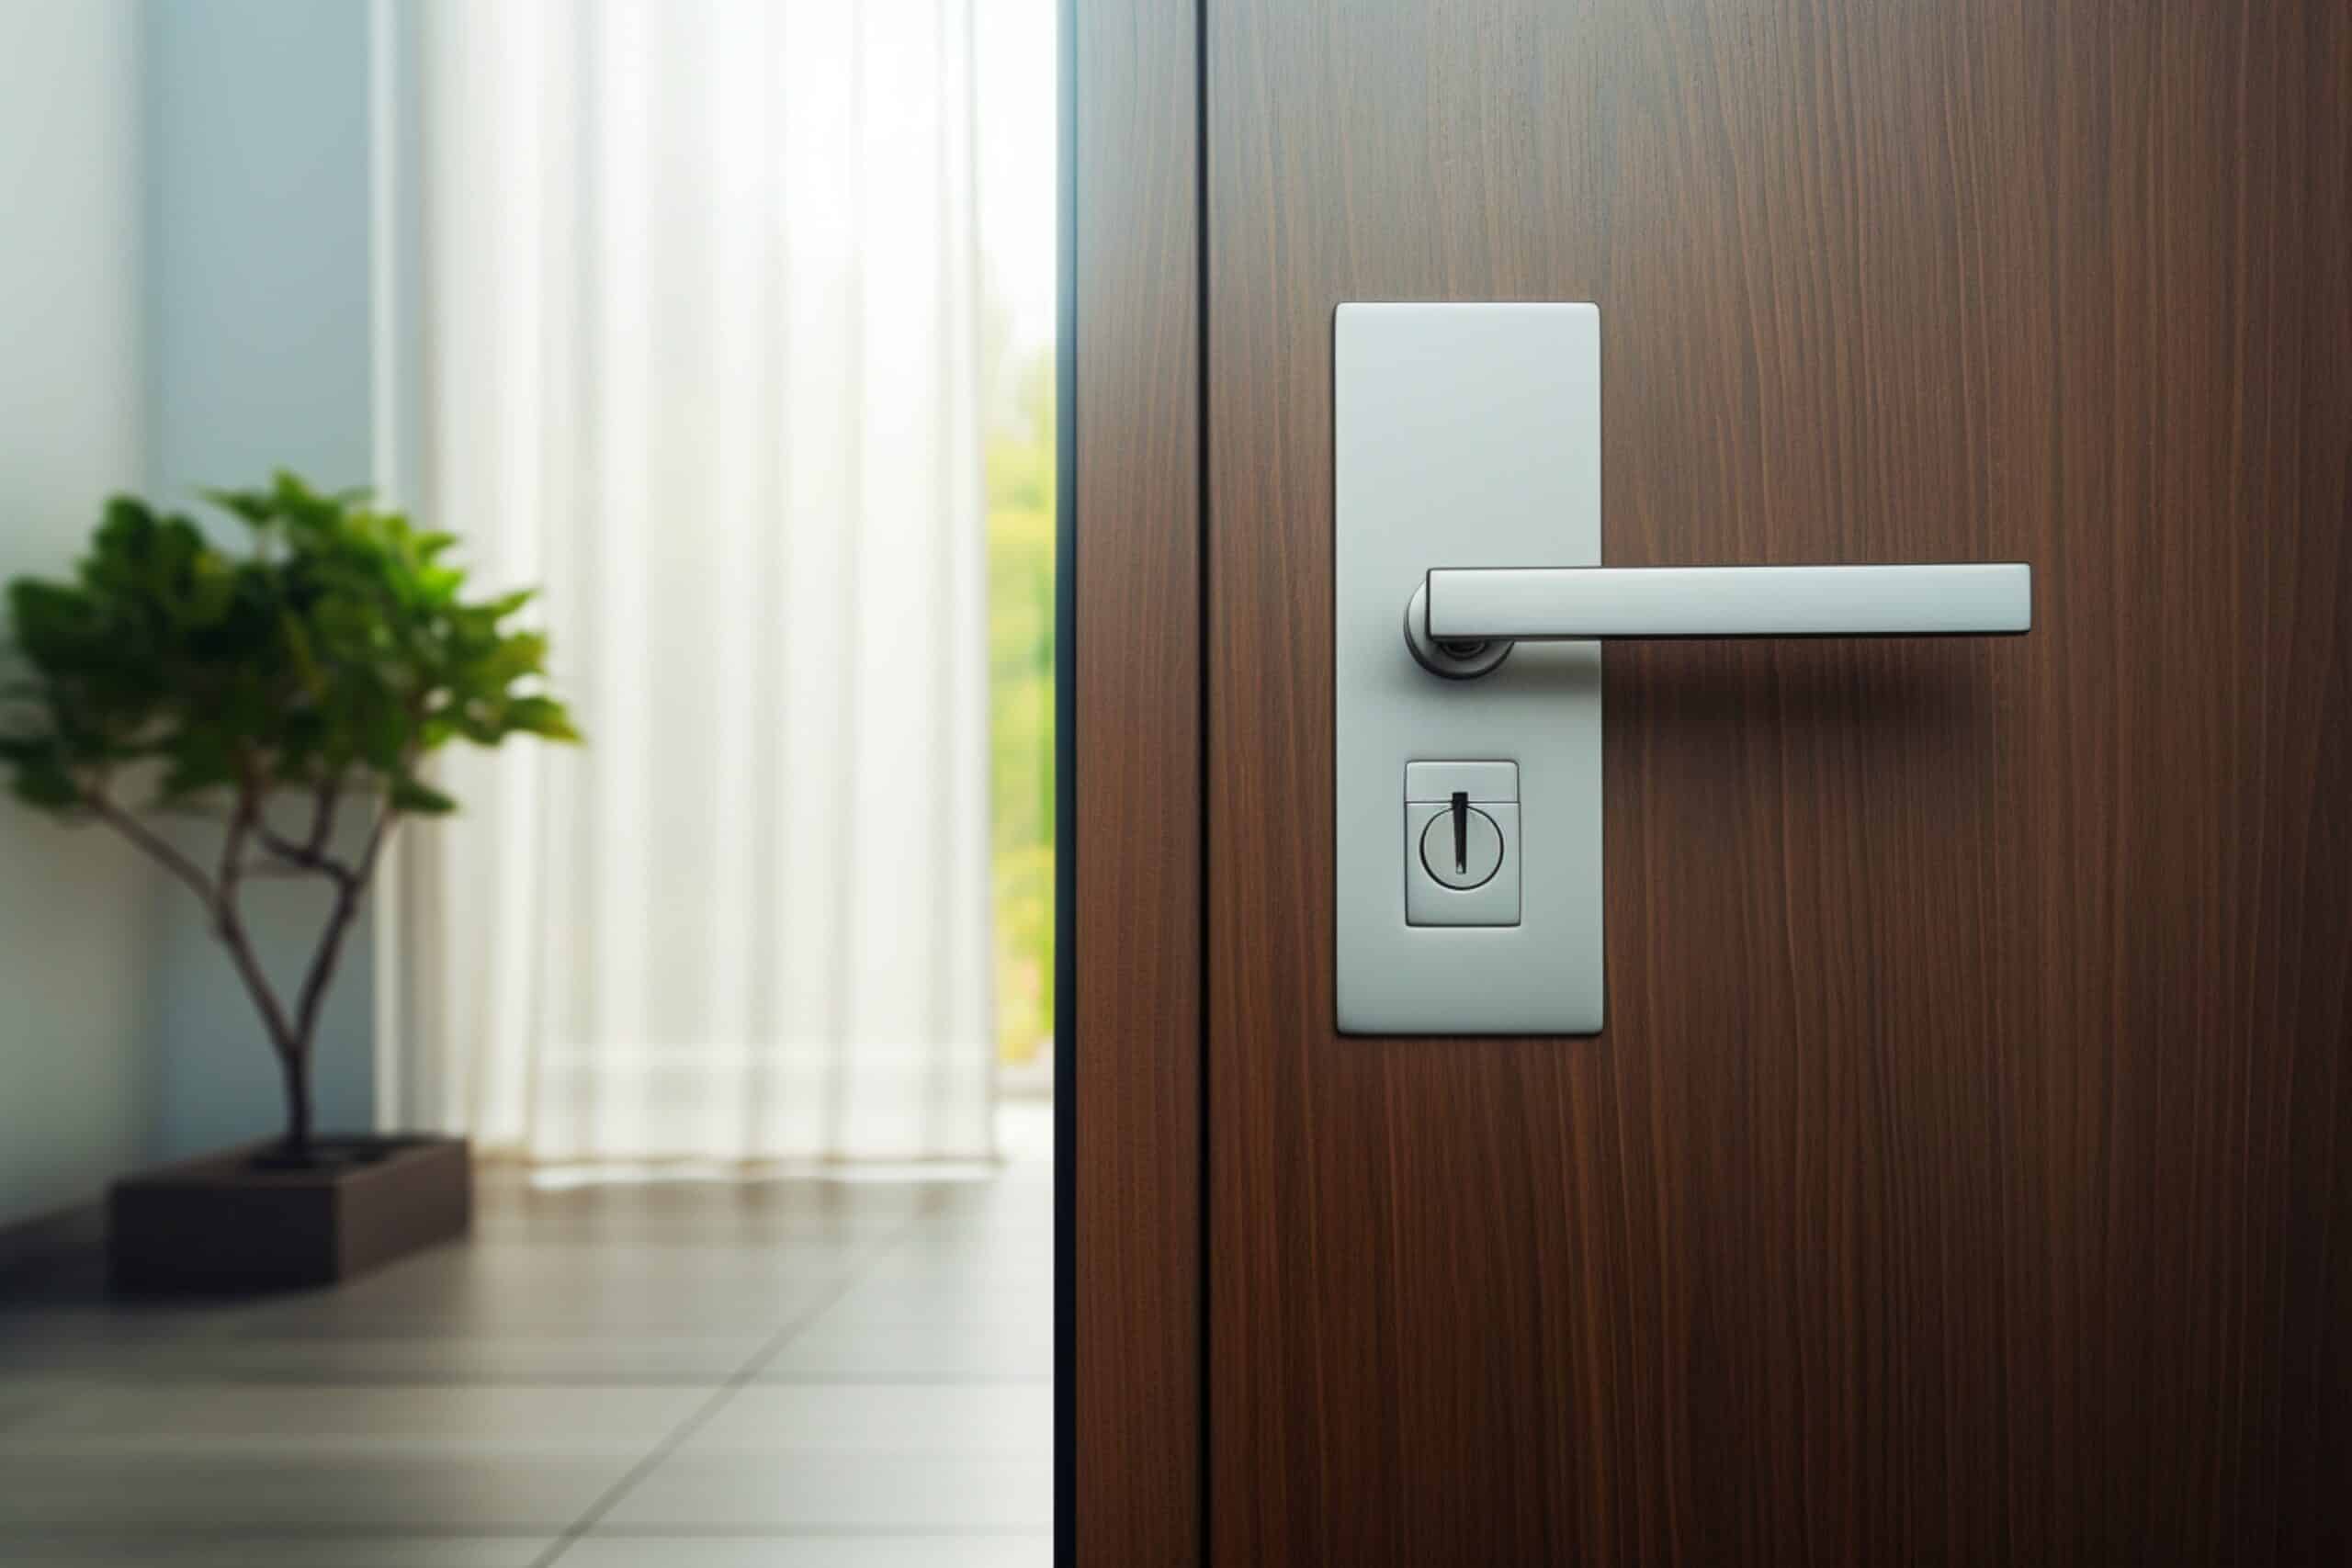 www.appr.com : Are Smart Door Locks Safe?